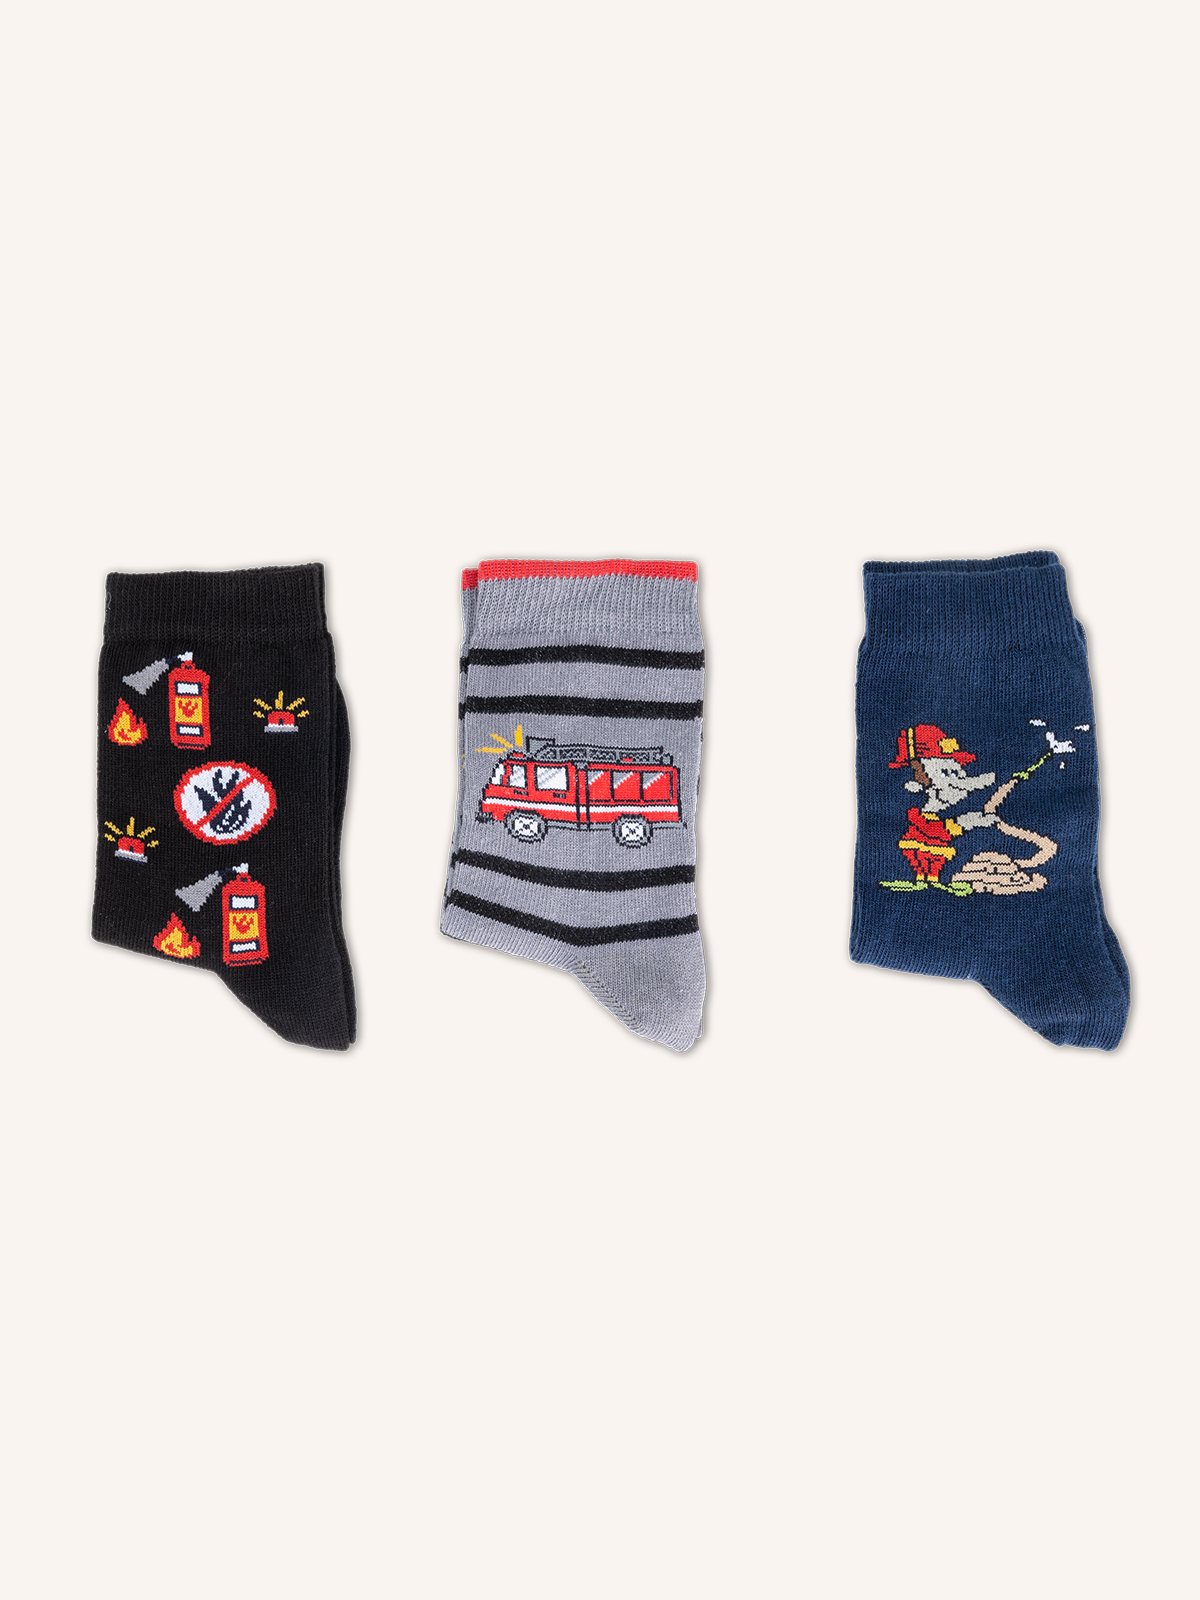 Short Cotton Socks for Children | Plain Color | Pack of 3 pairs | Games M